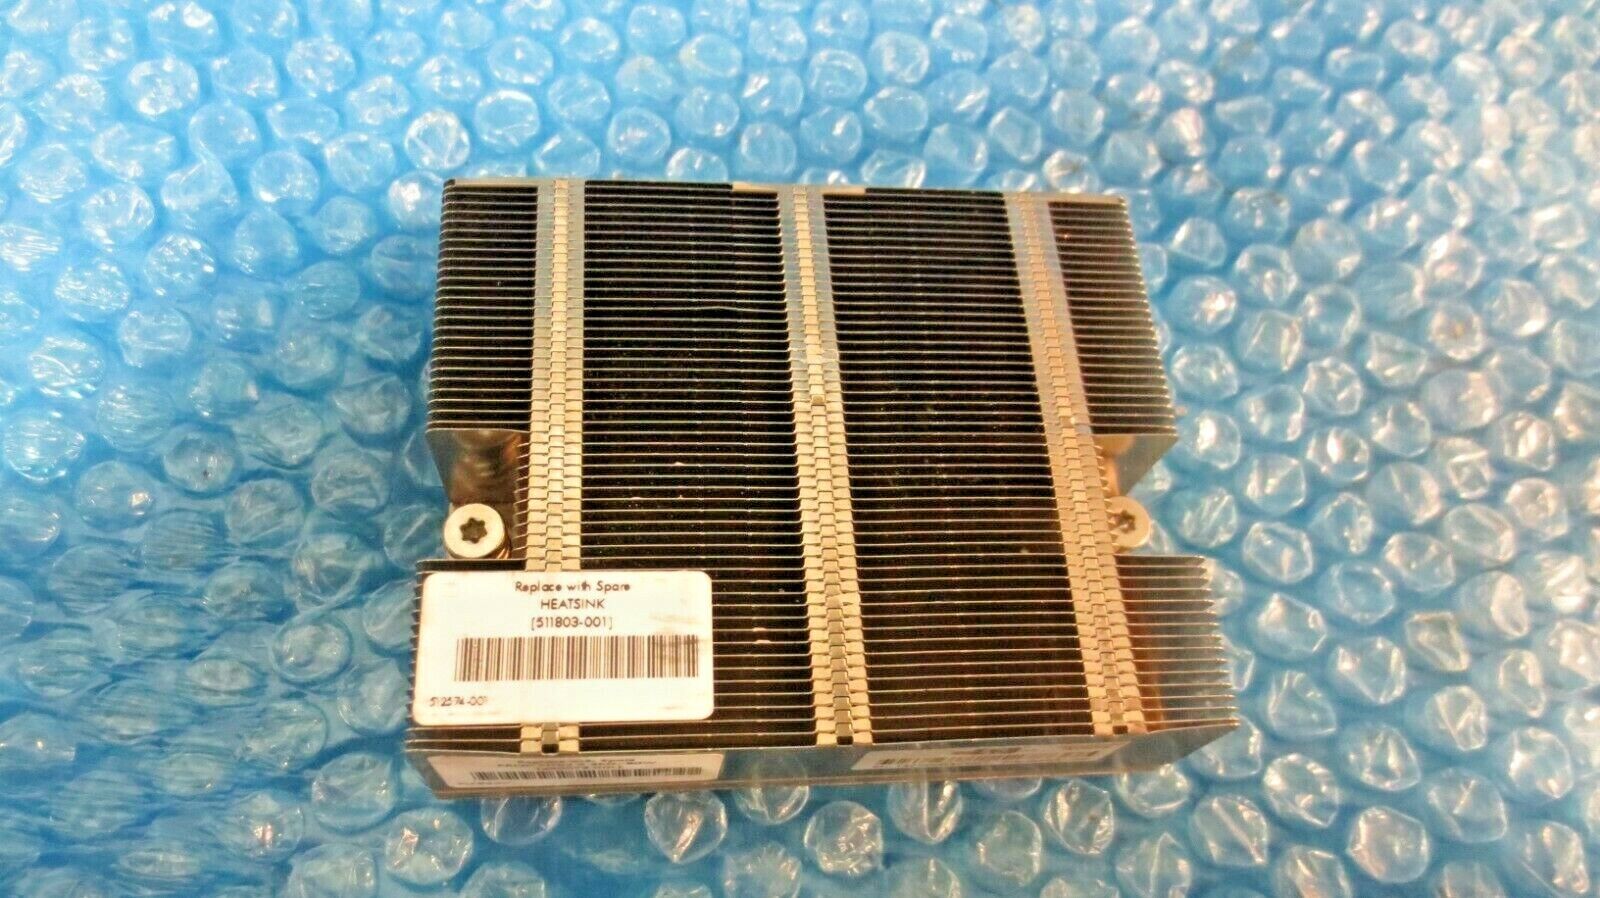 HP 490425-001 Proliant DL160 G6 Processor CPU Heatsink 511803-001